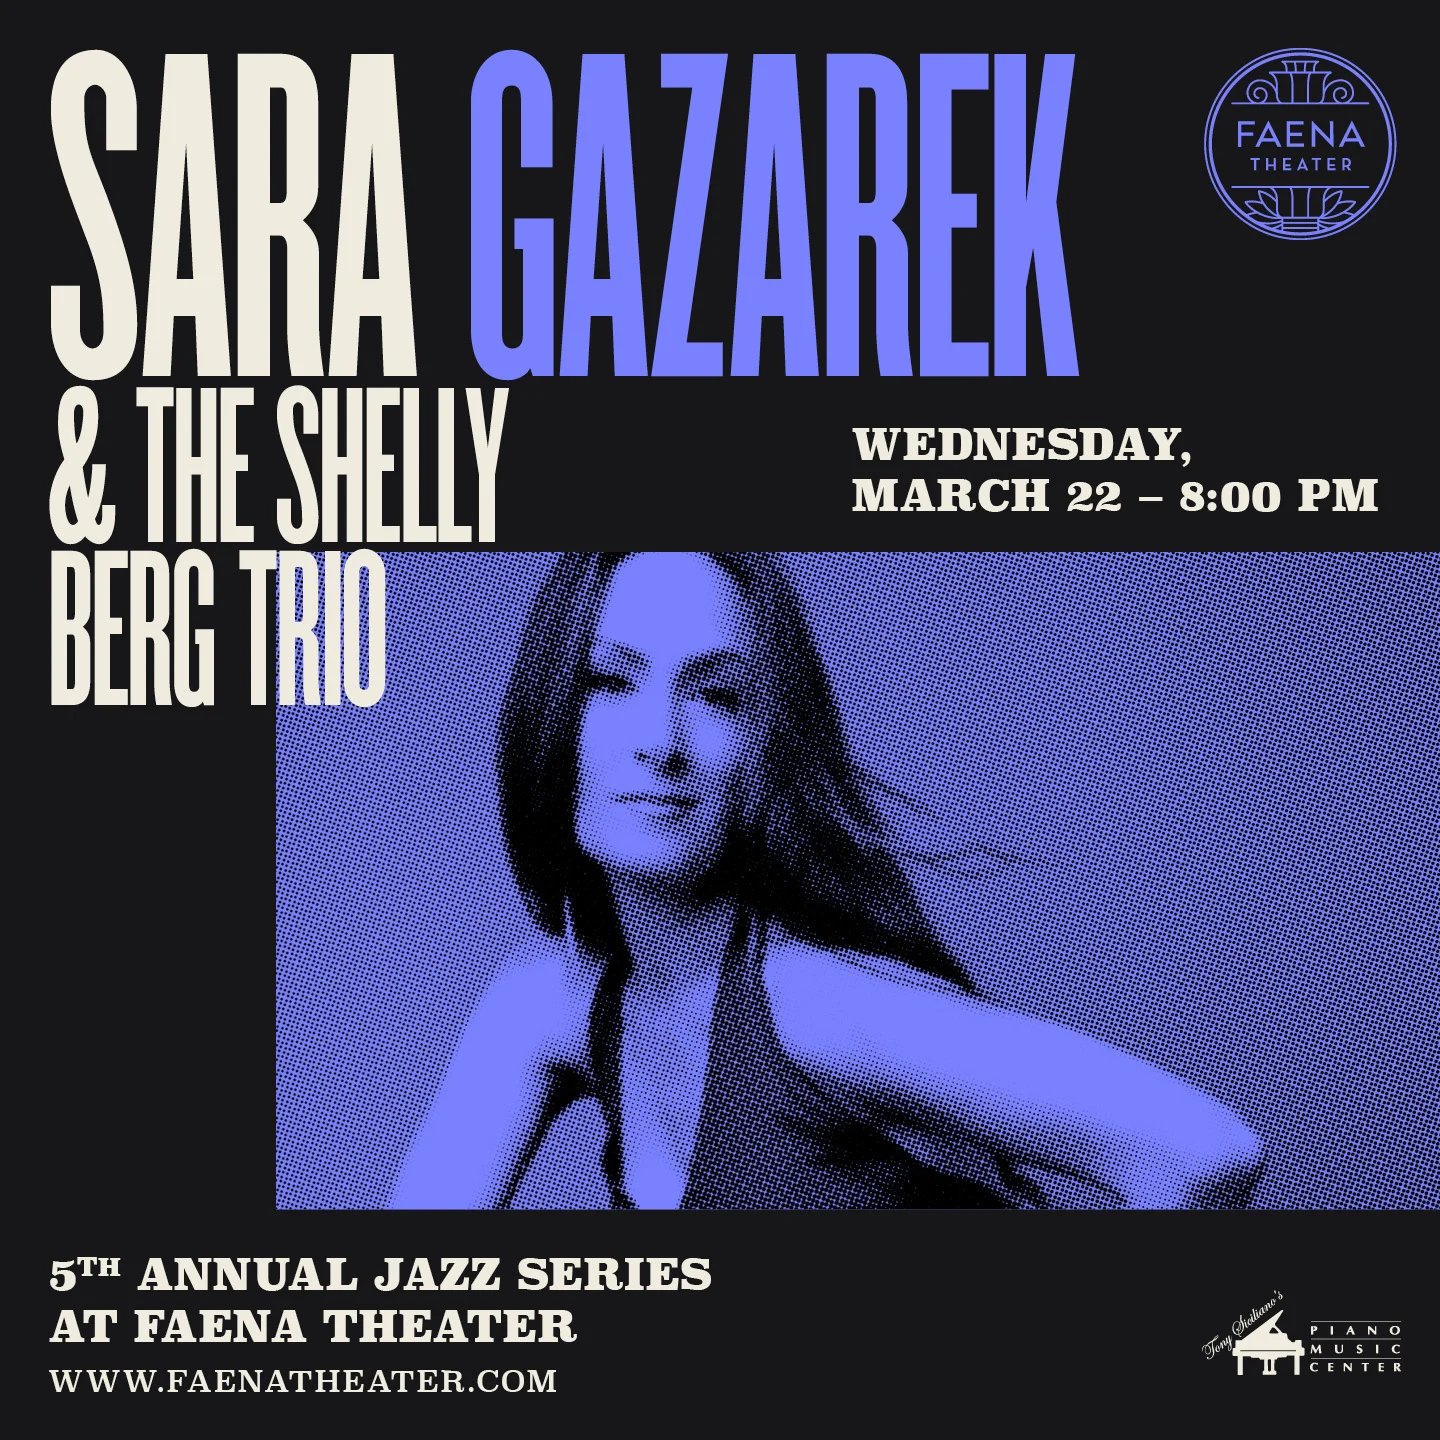 Sara Gazarek and the Shelly Berg Trio